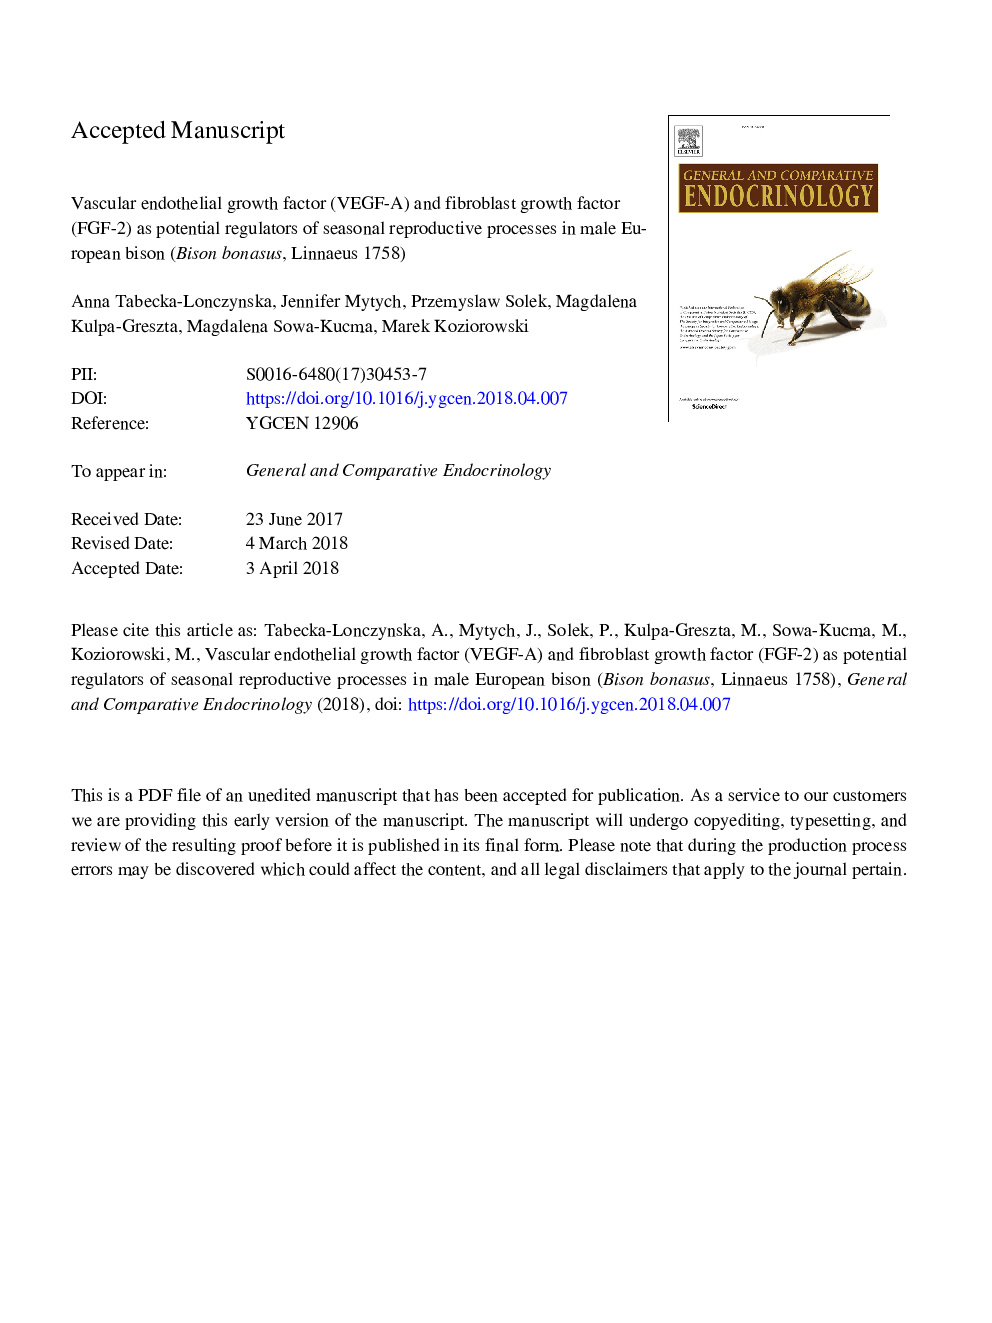 Vascular endothelial growth factor (VEGF-A) and fibroblast growth factor (FGF-2) as potential regulators of seasonal reproductive processes in male European bison (Bison bonasus, Linnaeus 1758)